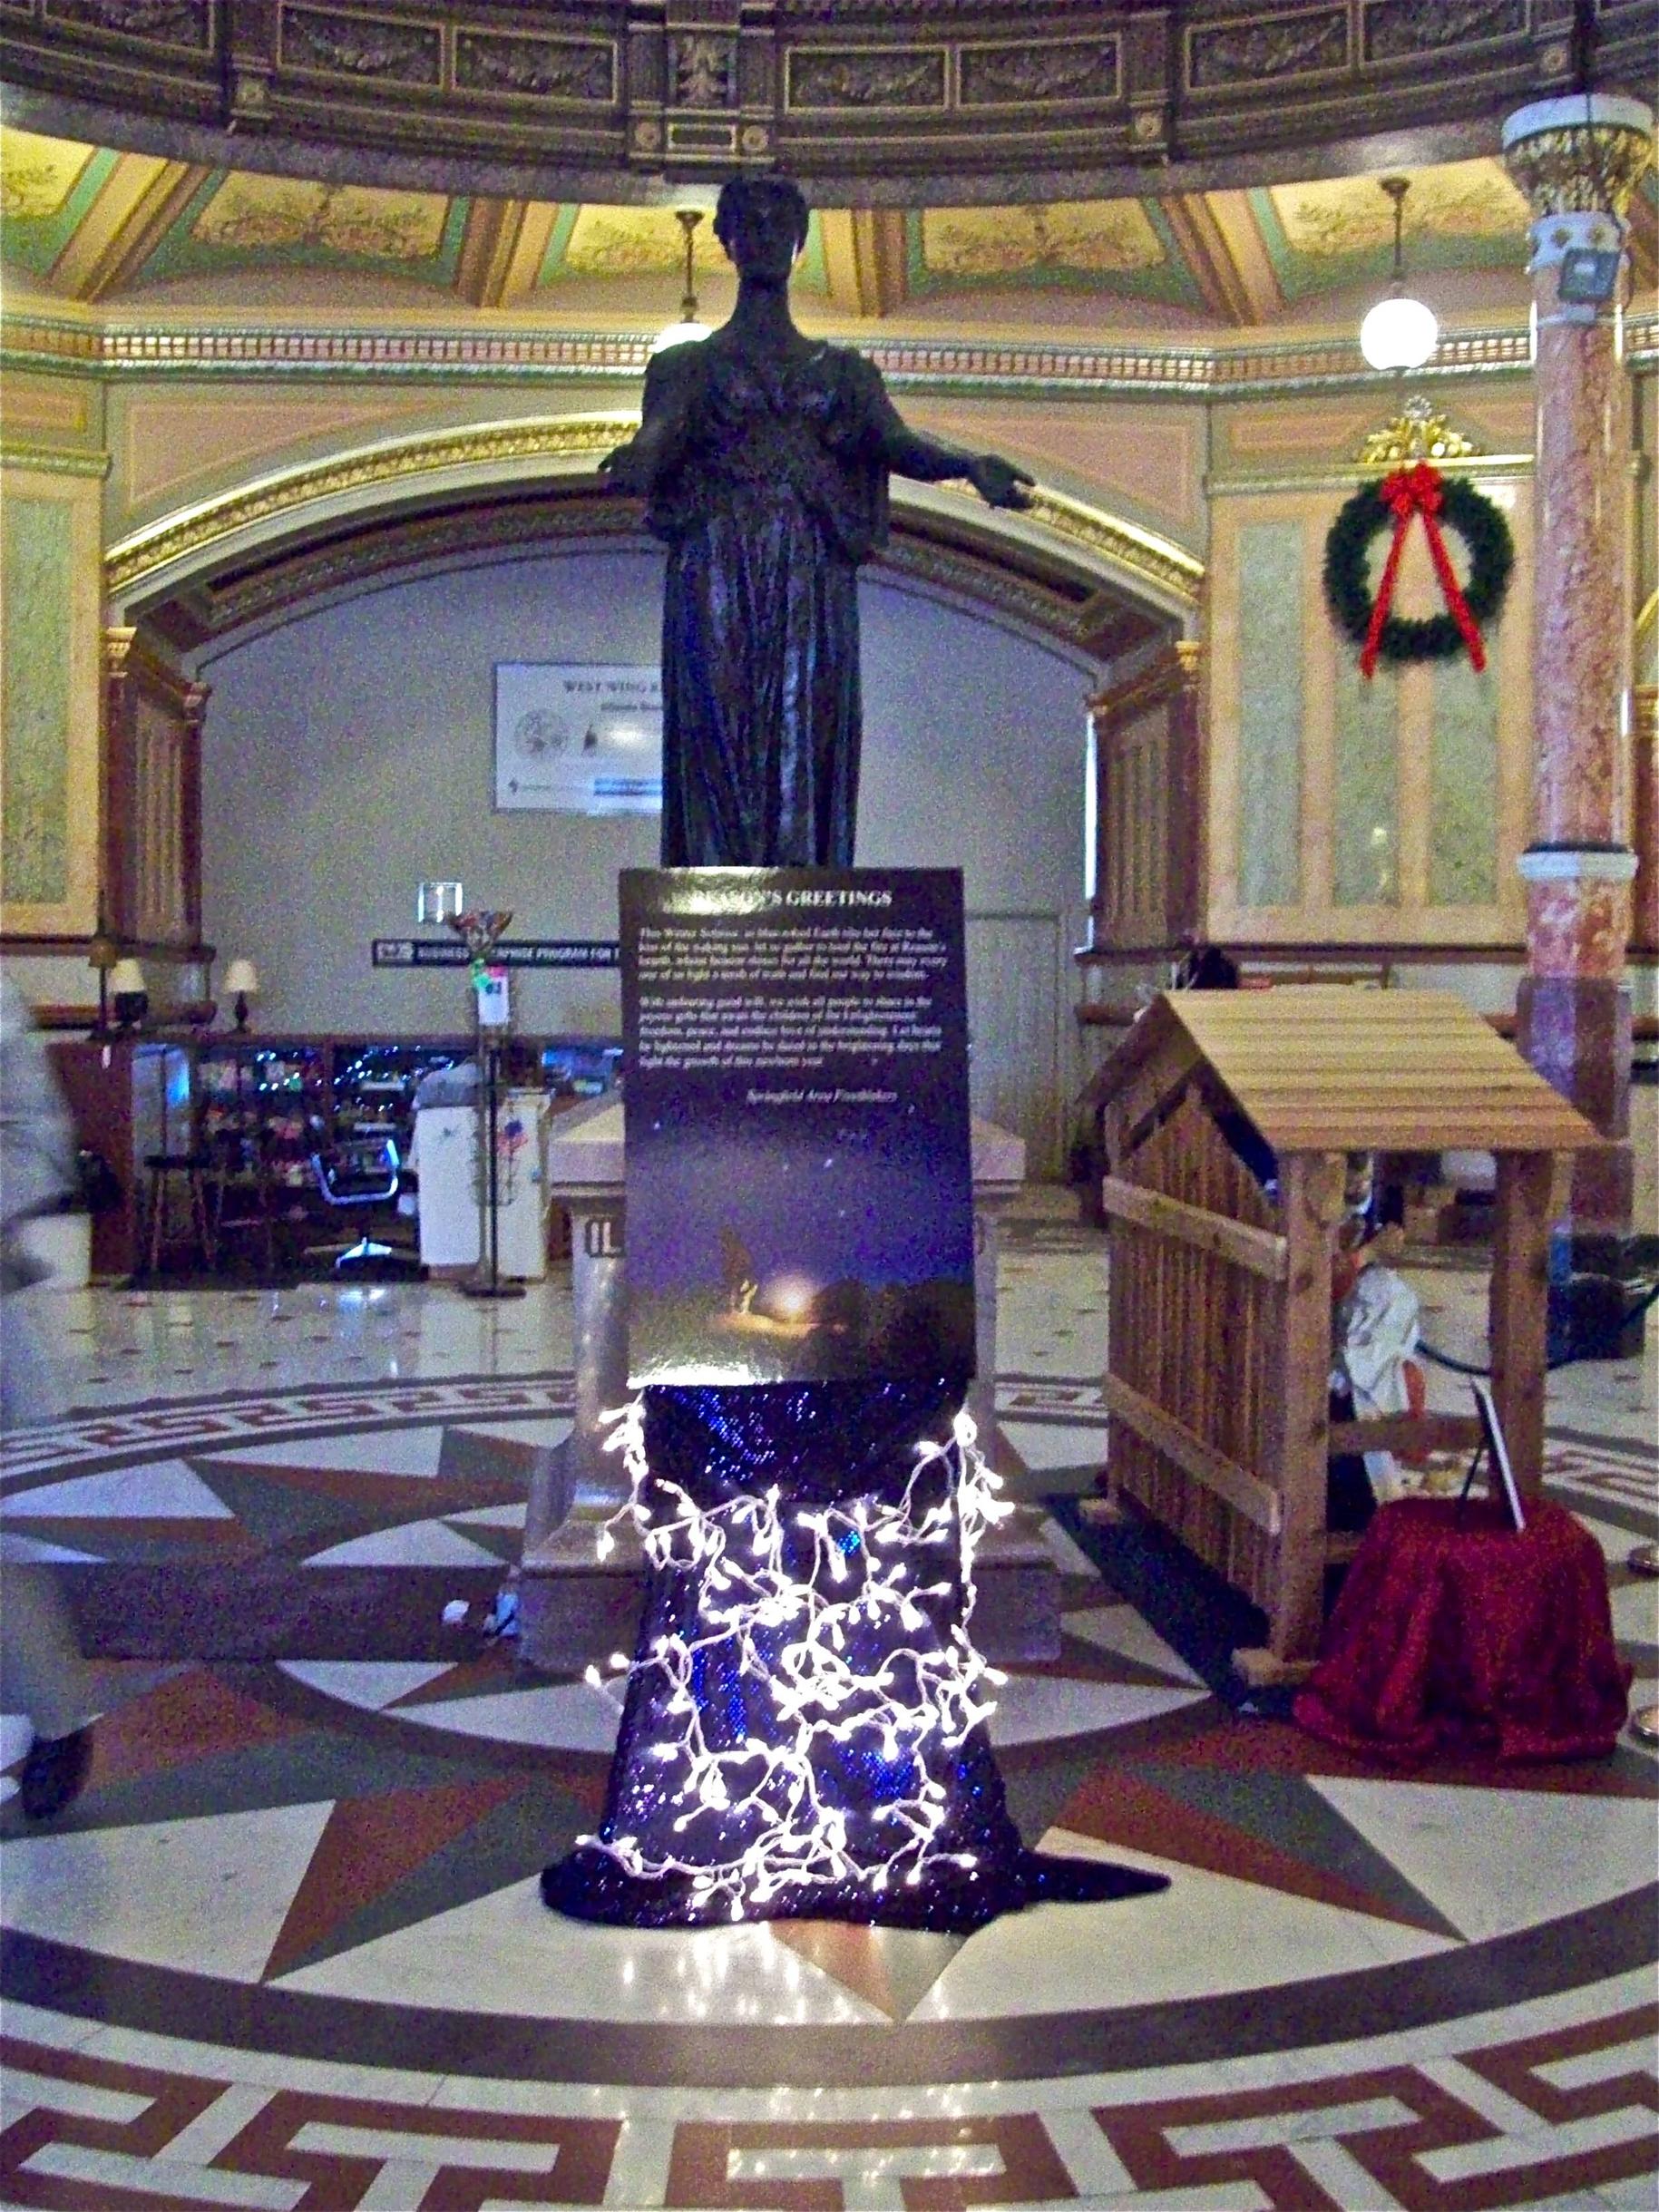 Seen Inside the Illinois State Capitol Rotunda